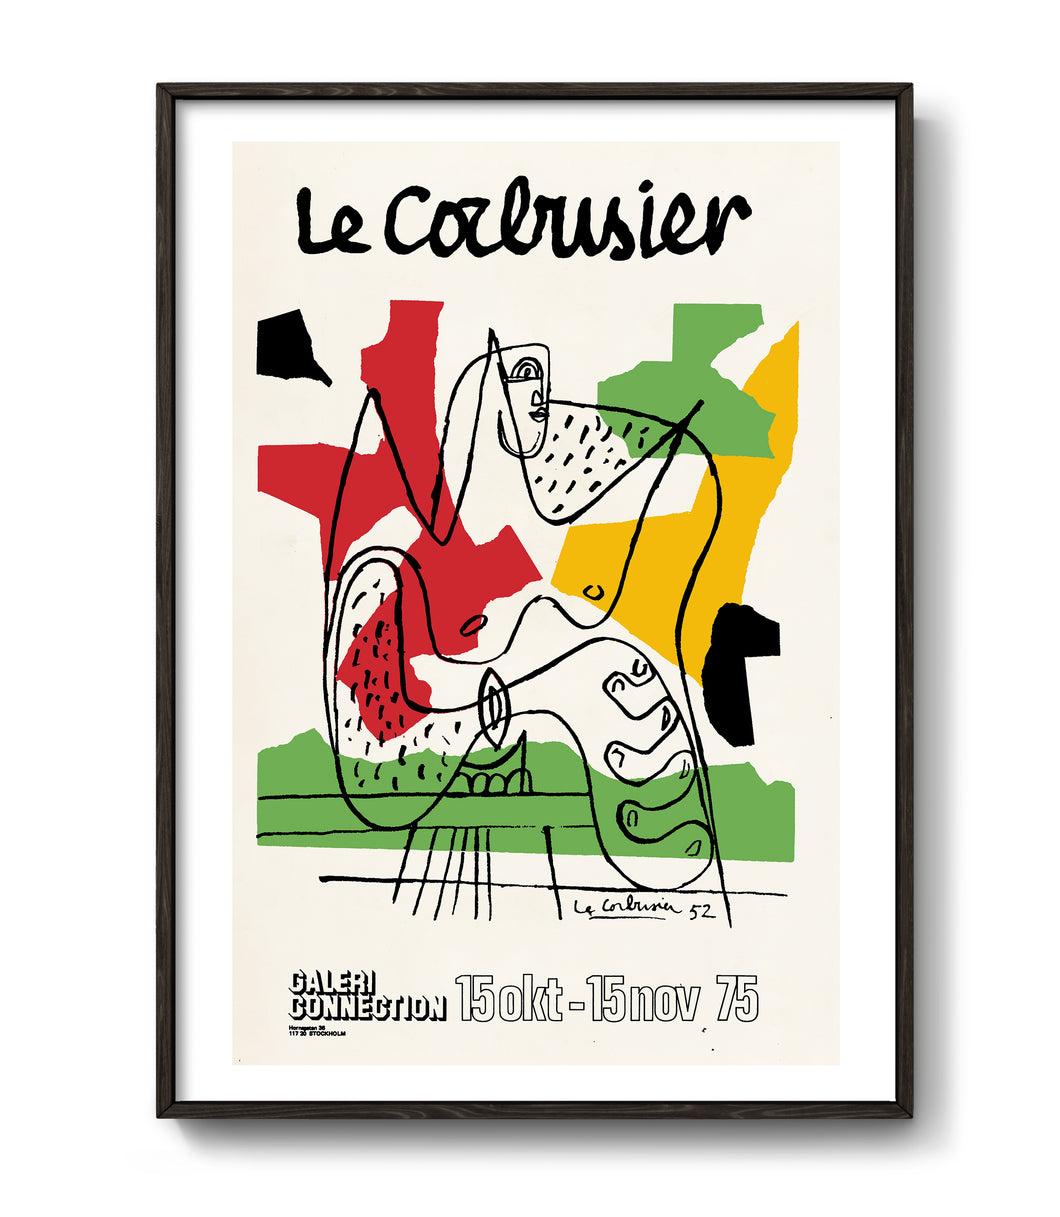 Le Corbusier exhibition Poster